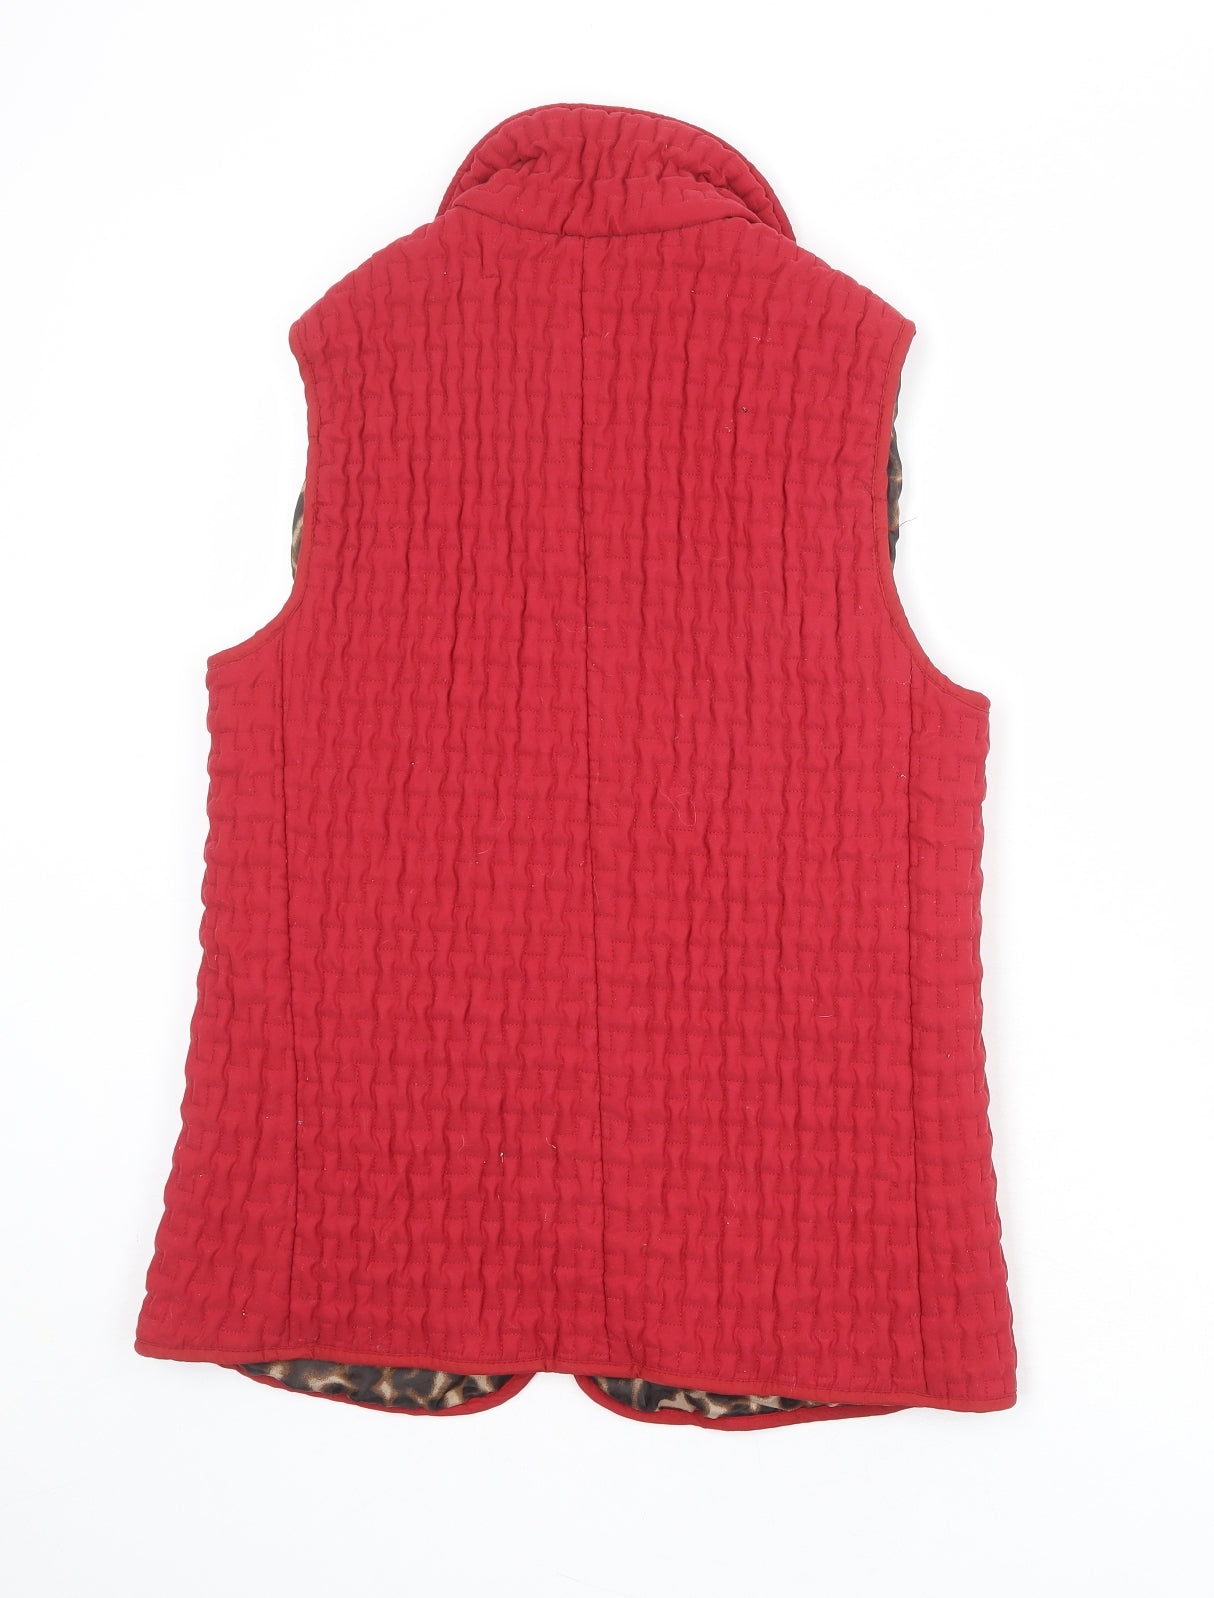 Guisen Womens Red Gilet Jacket Size M Zip - Textured